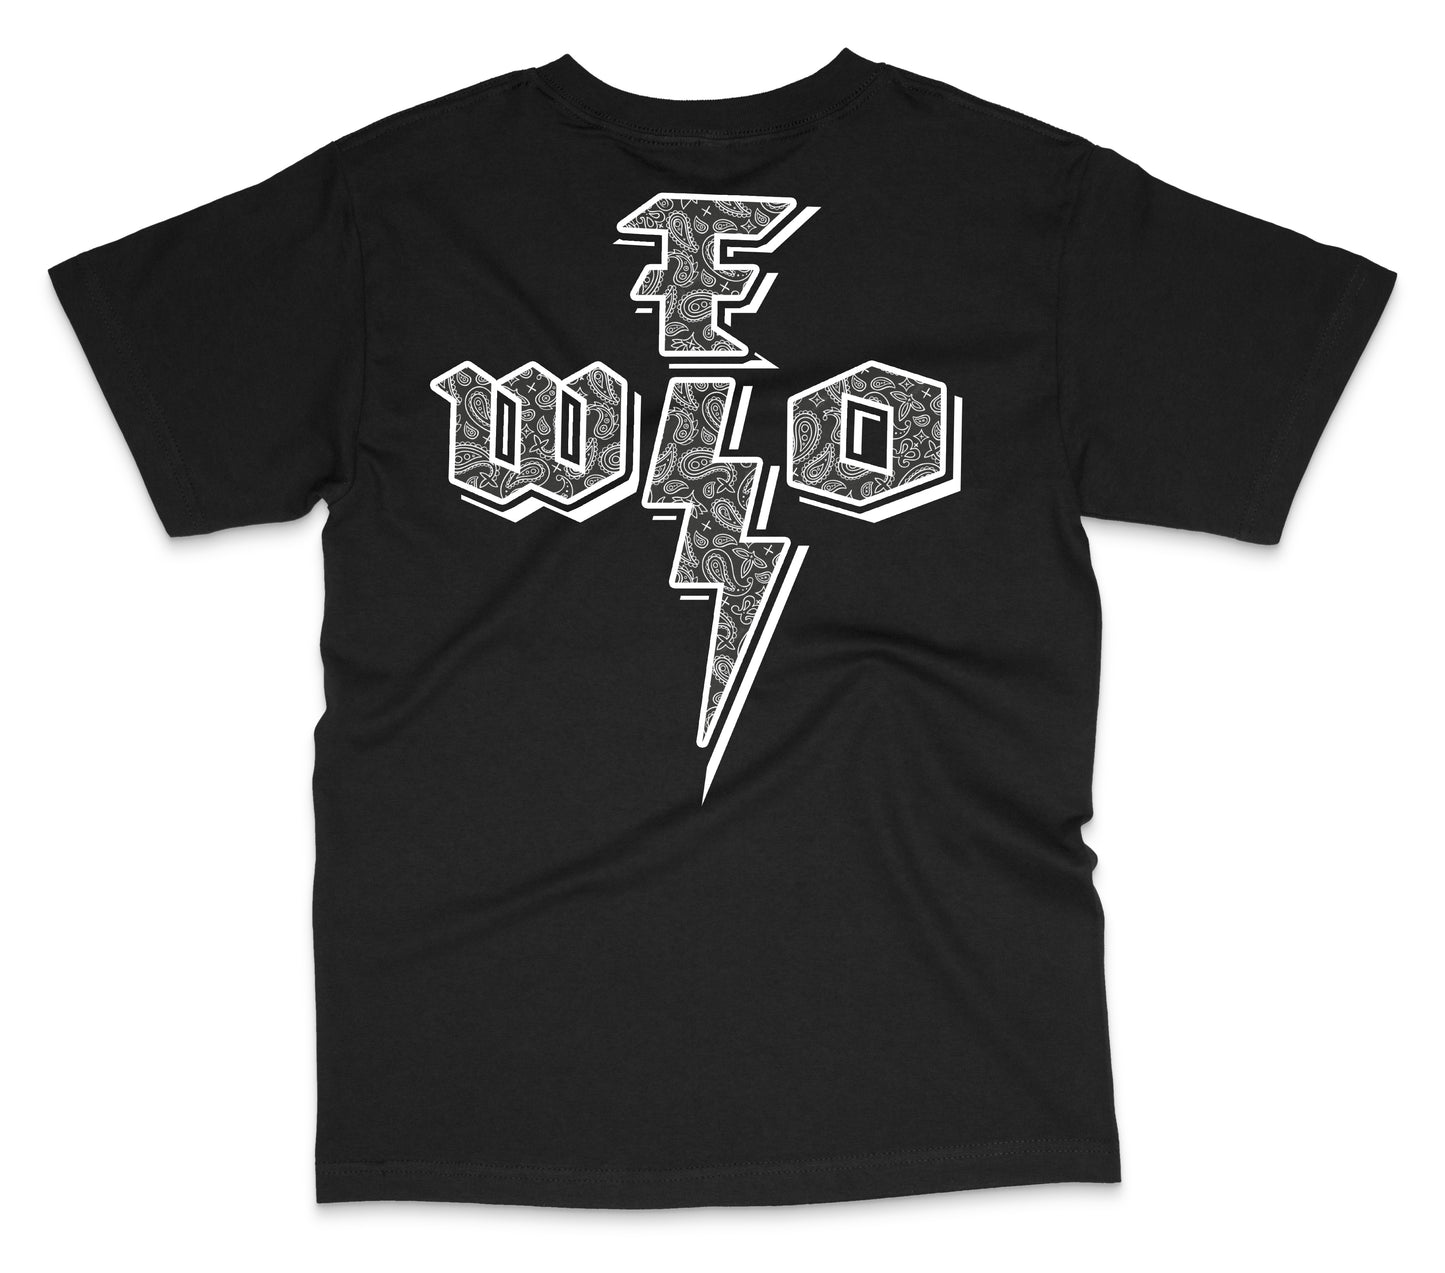 WFO 4 LIFE ™ - "Paisley G" T-Shirt - Black